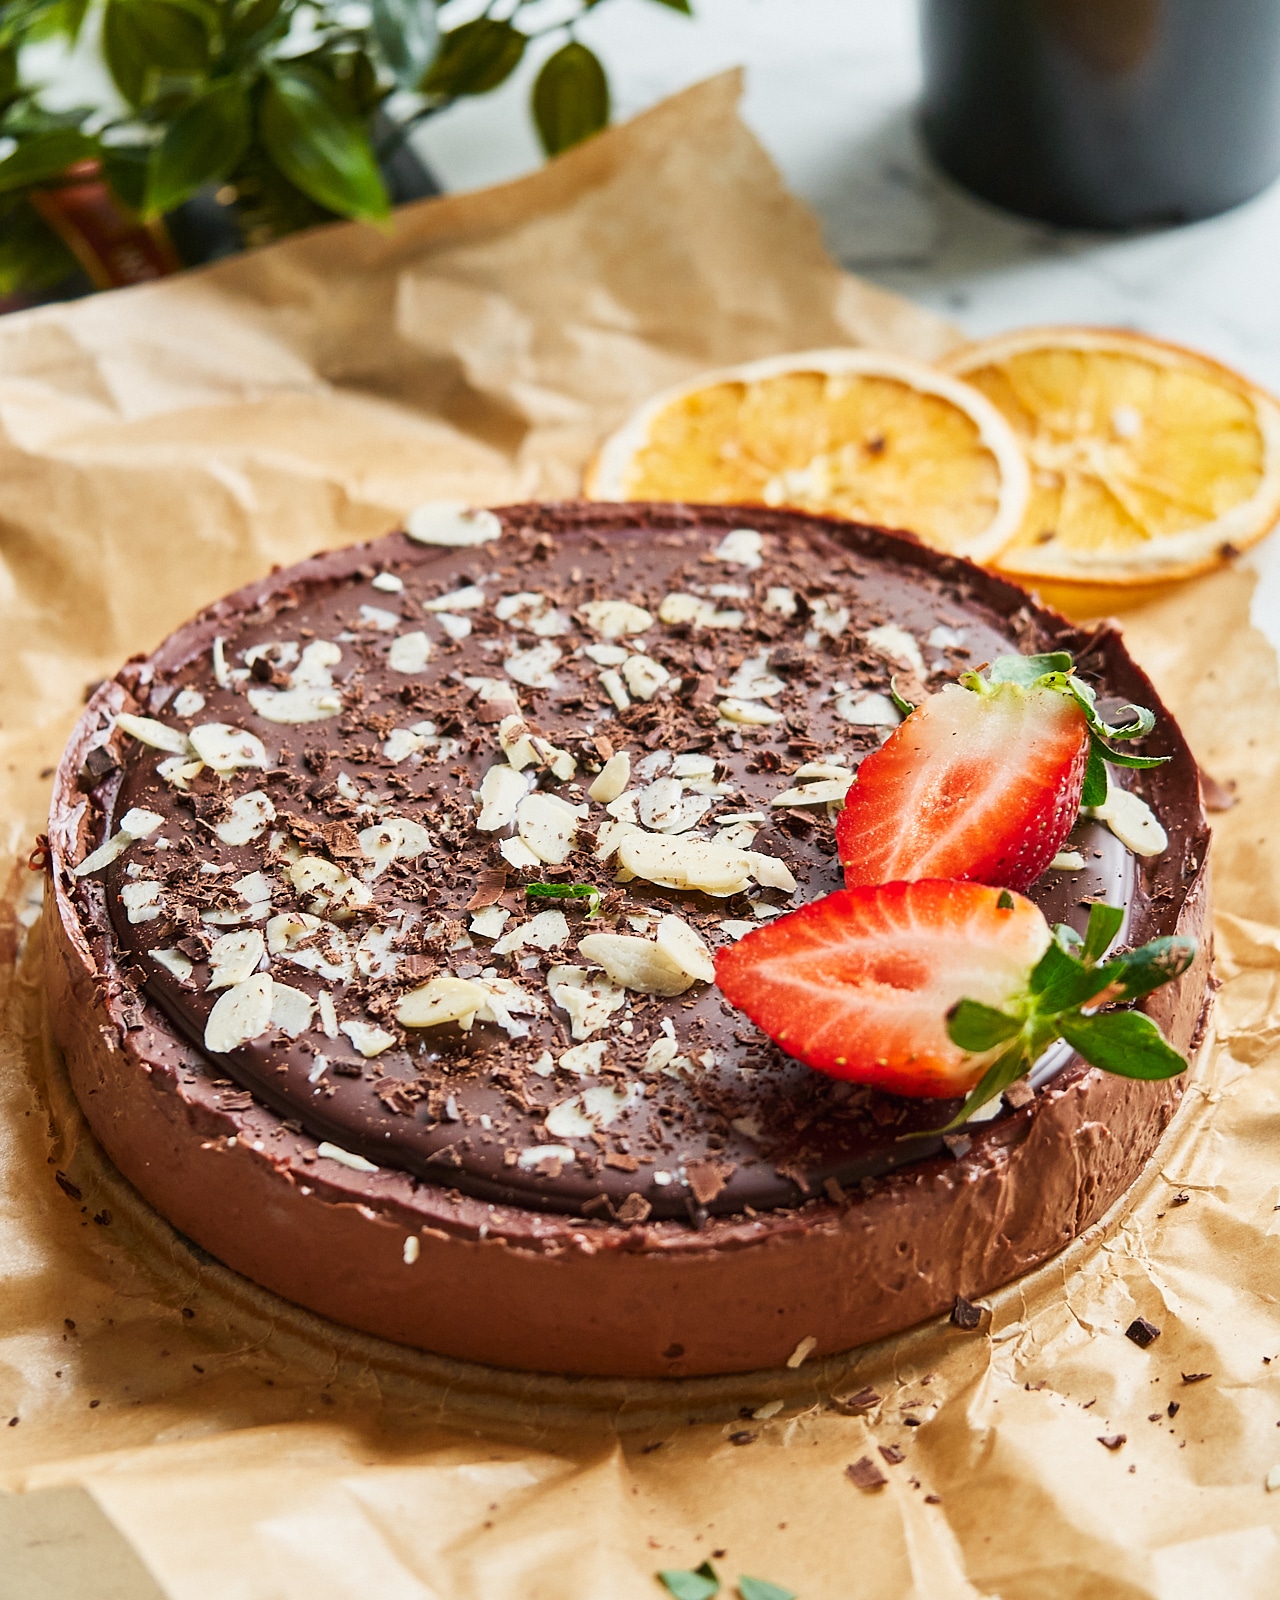 JELL-O No-Bake Chocolate Cheesecake Bars - My Food and Family